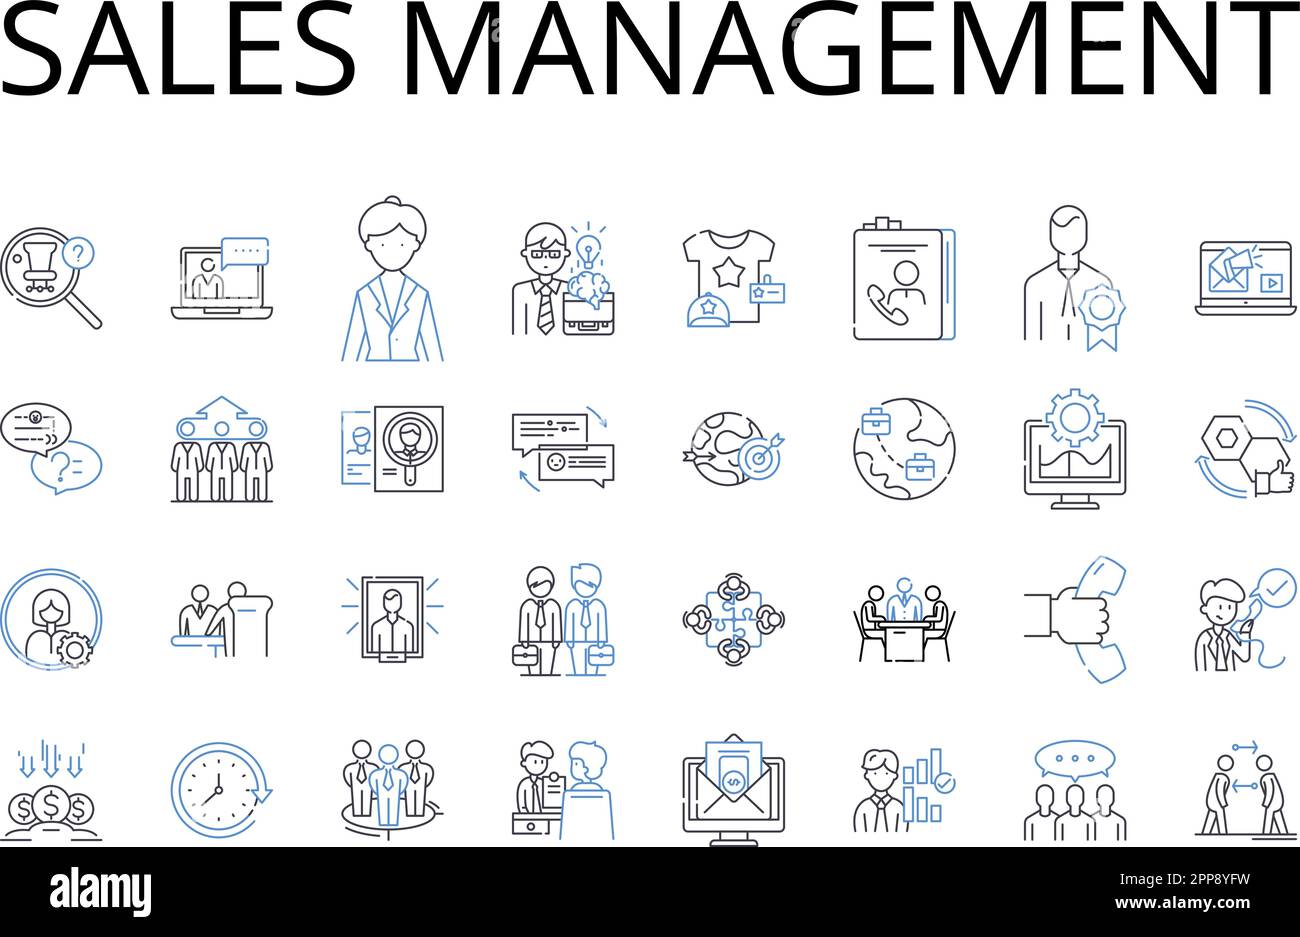 Sales management line icons collection. Sales leadership, Marketing management, Team organization, Account management, Brand management, Customer Stock Vector